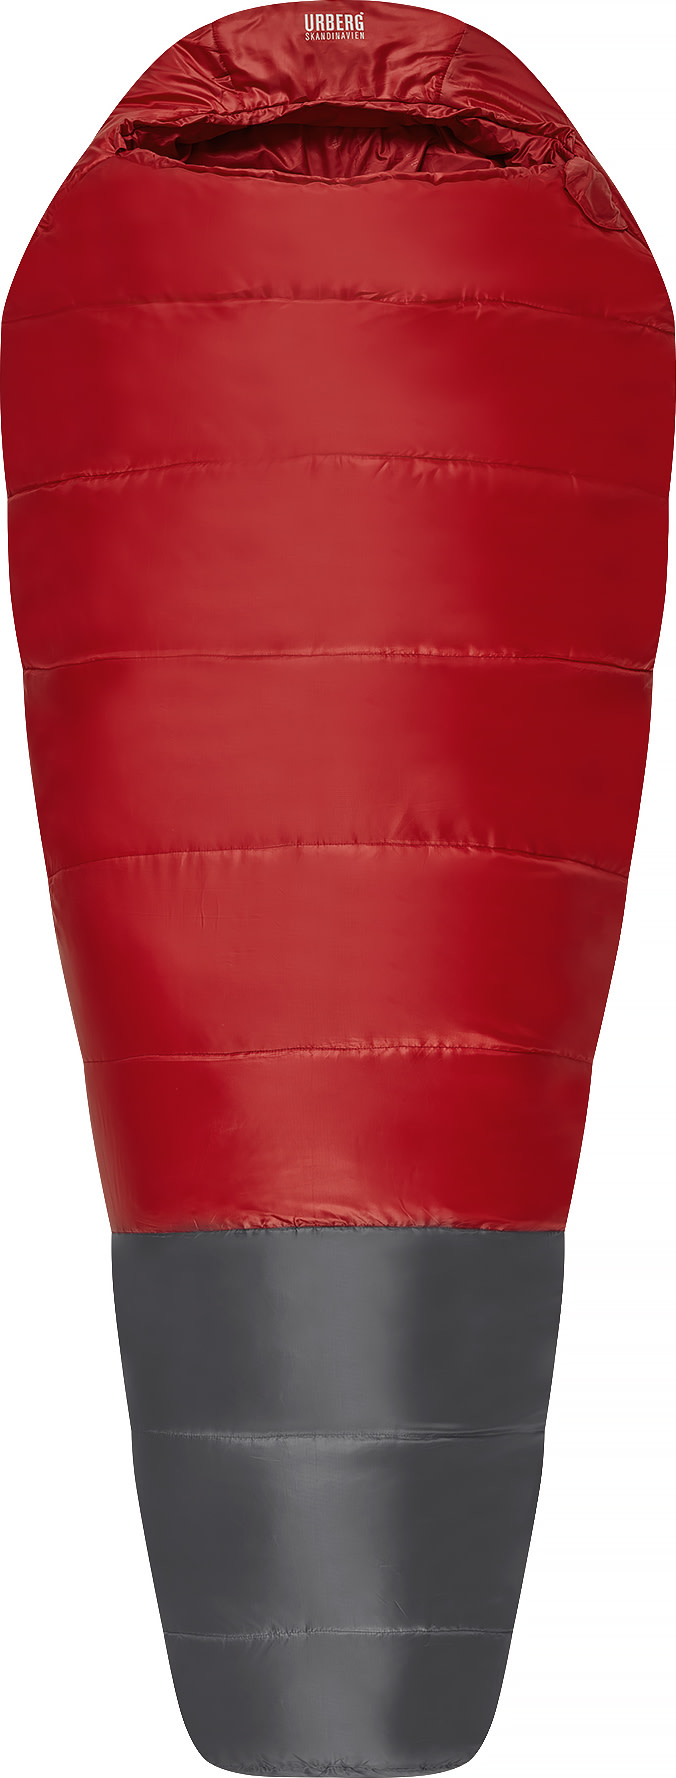 Urberg Extra Wide Sleeping Bag Rio Red/Asphalt